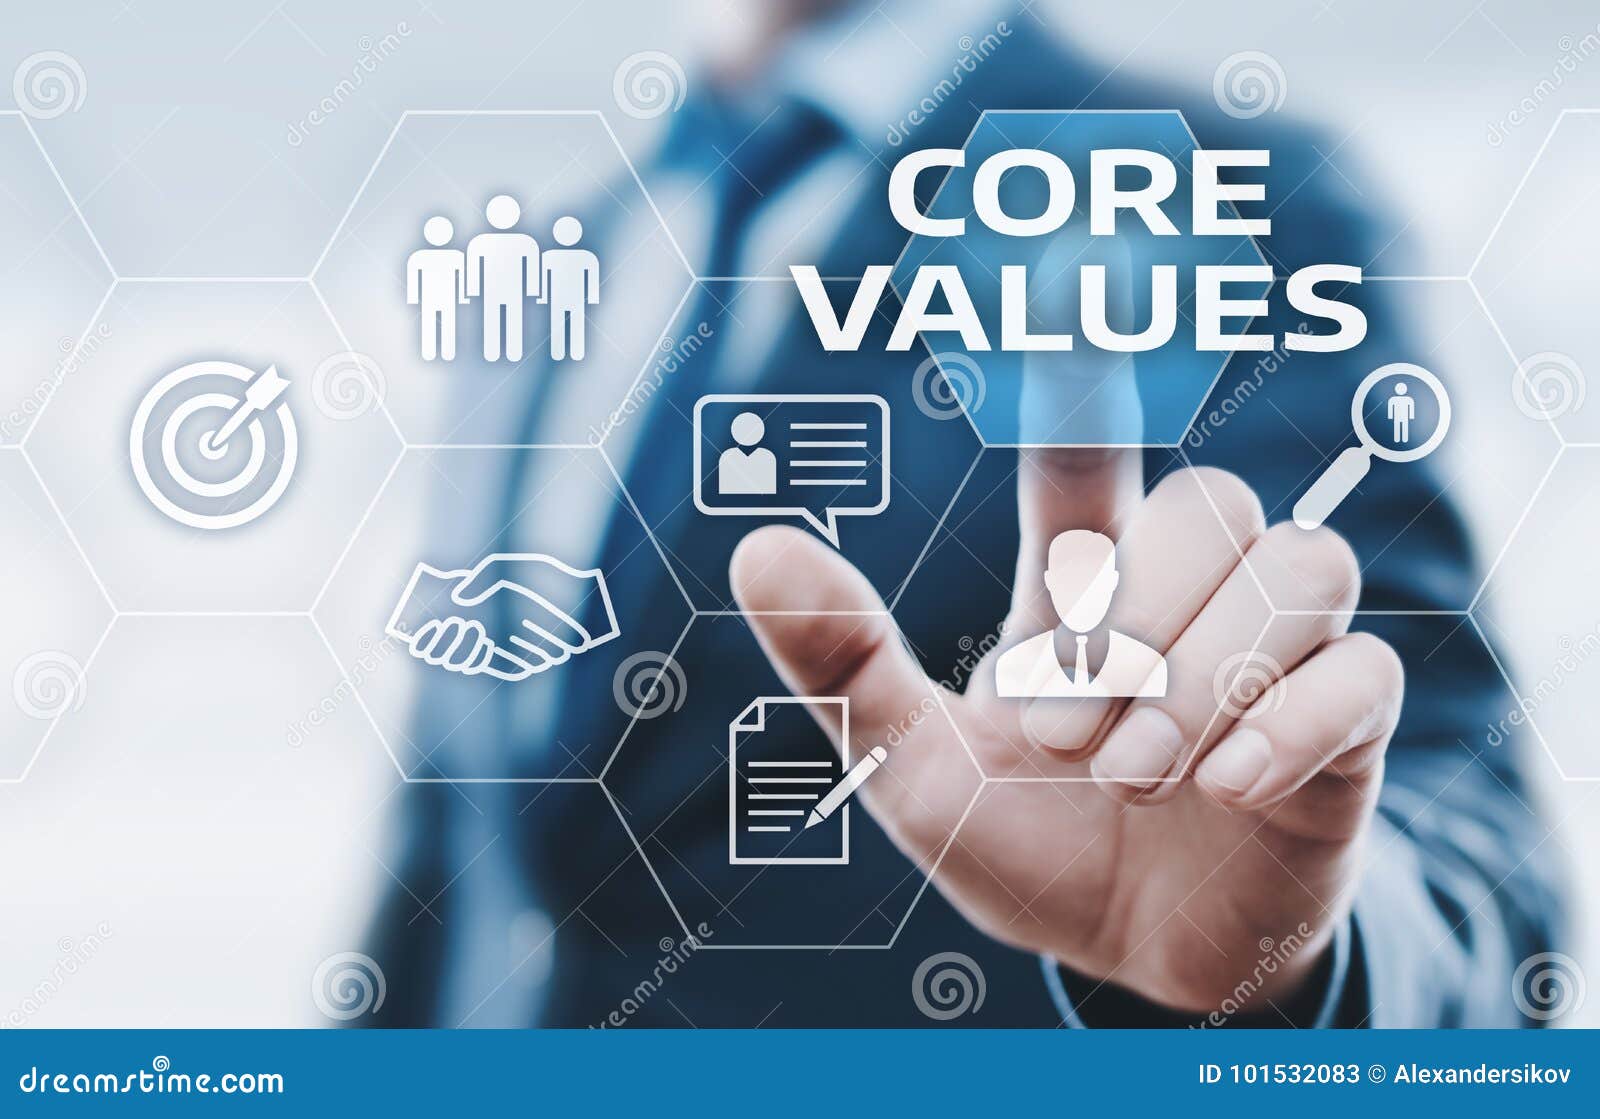 core values responsibility ethics goals company concept